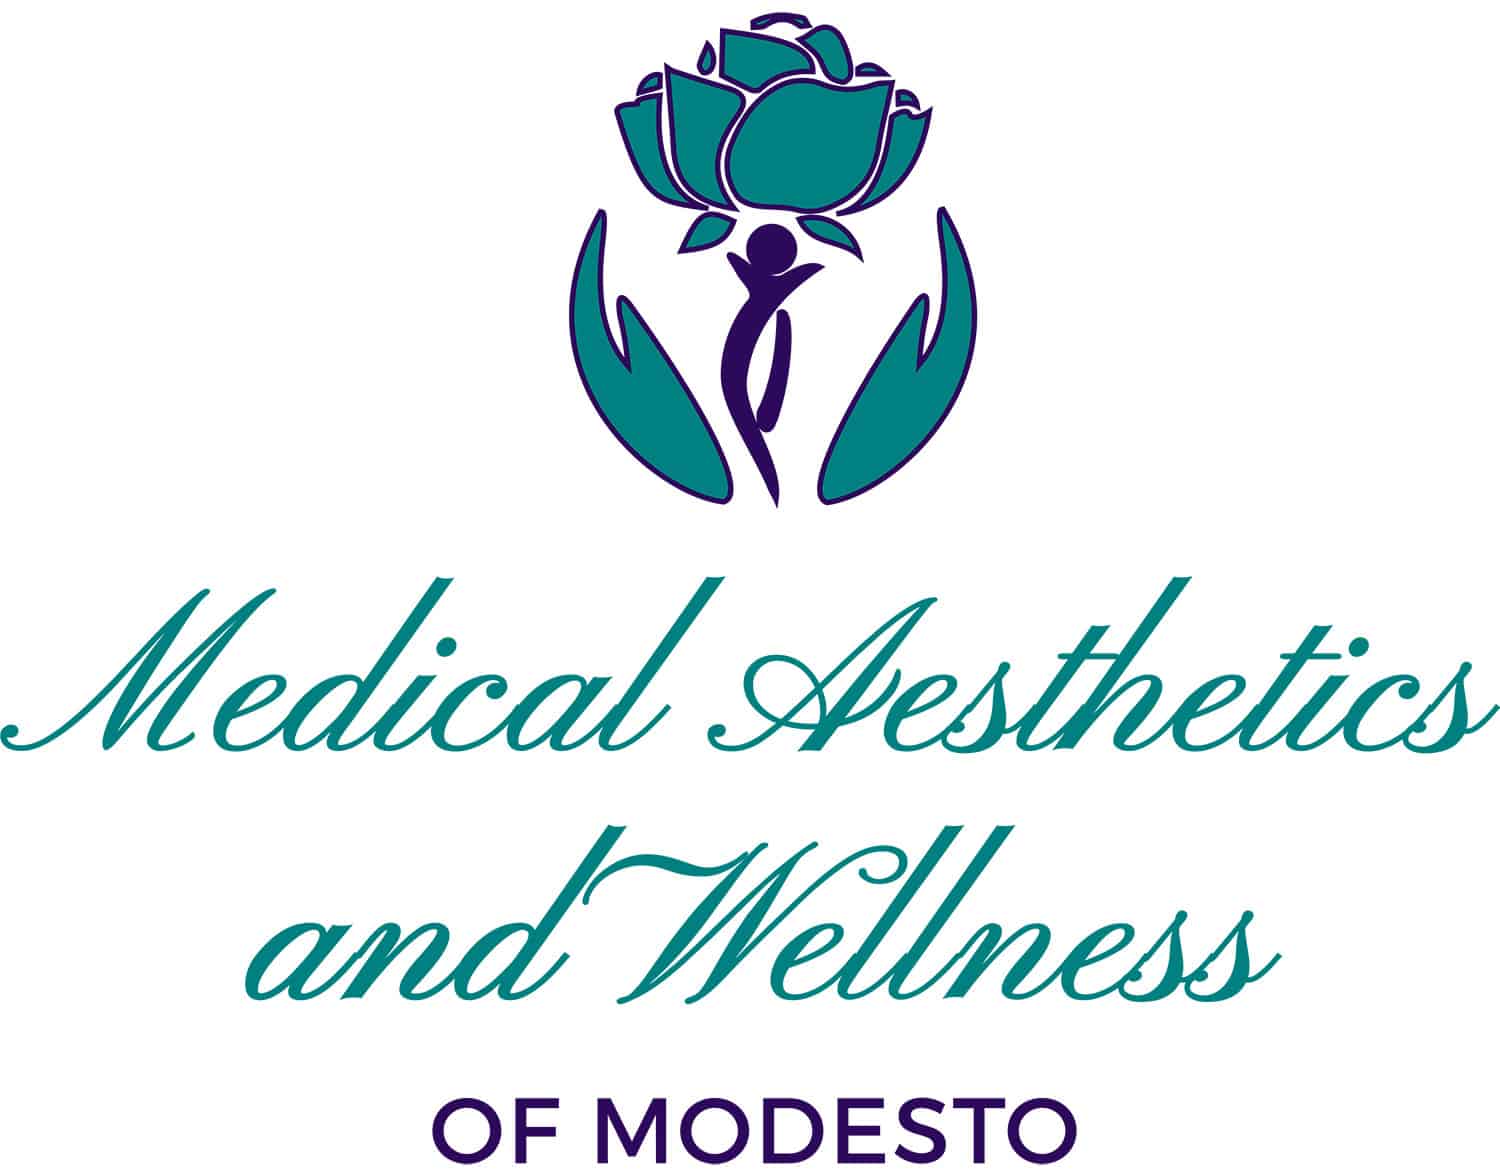 Welcome | Medical Aesthetics & Wellness of Modesto